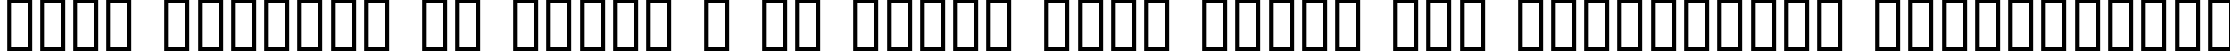 Пример написания шрифтом DreadLox текста на украинском